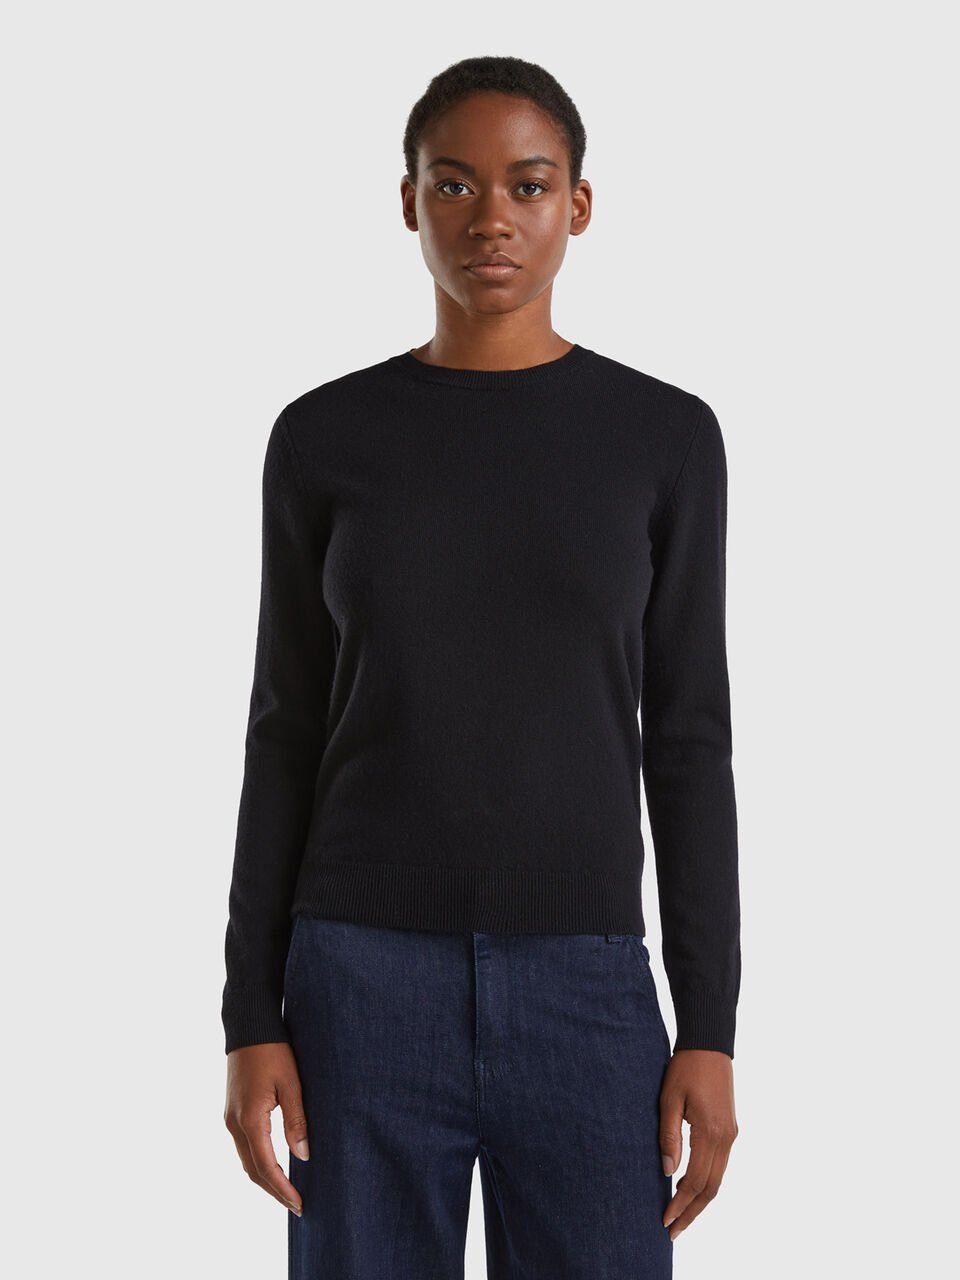 Black crew neck sweater in Merino wool - Black | Benetton